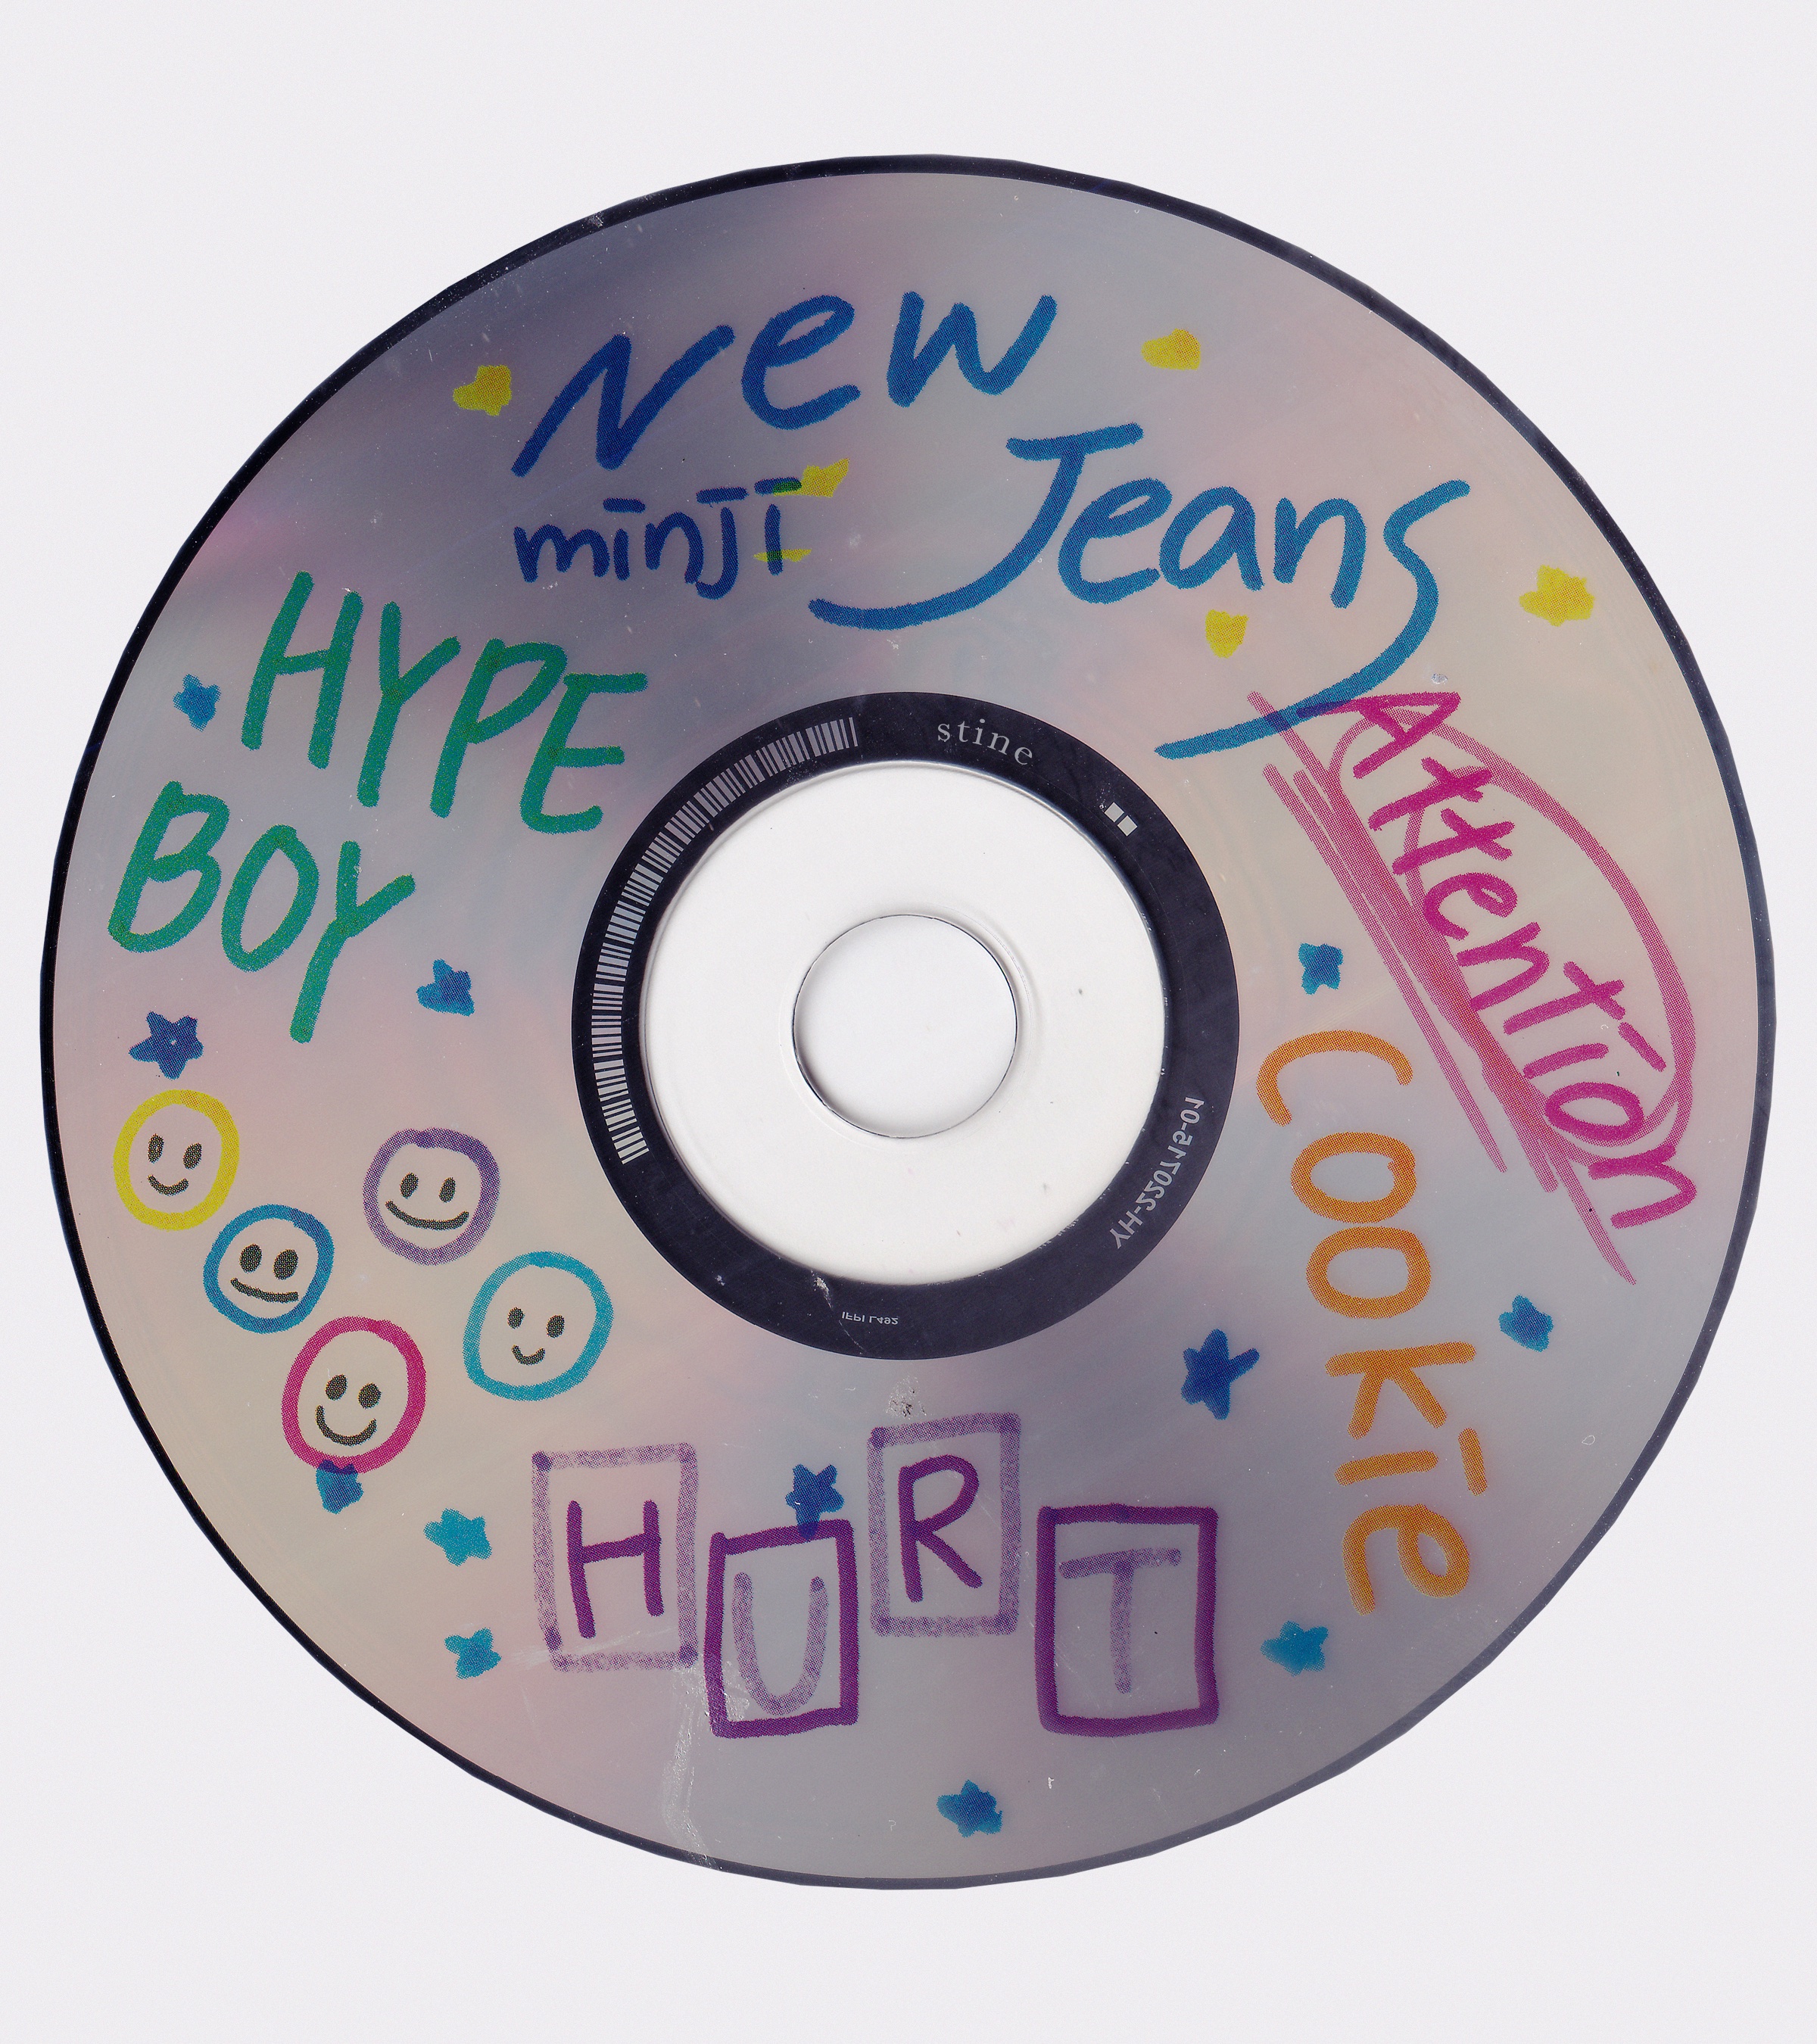 🐇 on X: newjeans 1st ep 'new jeans' cd scan: newjeans & minji